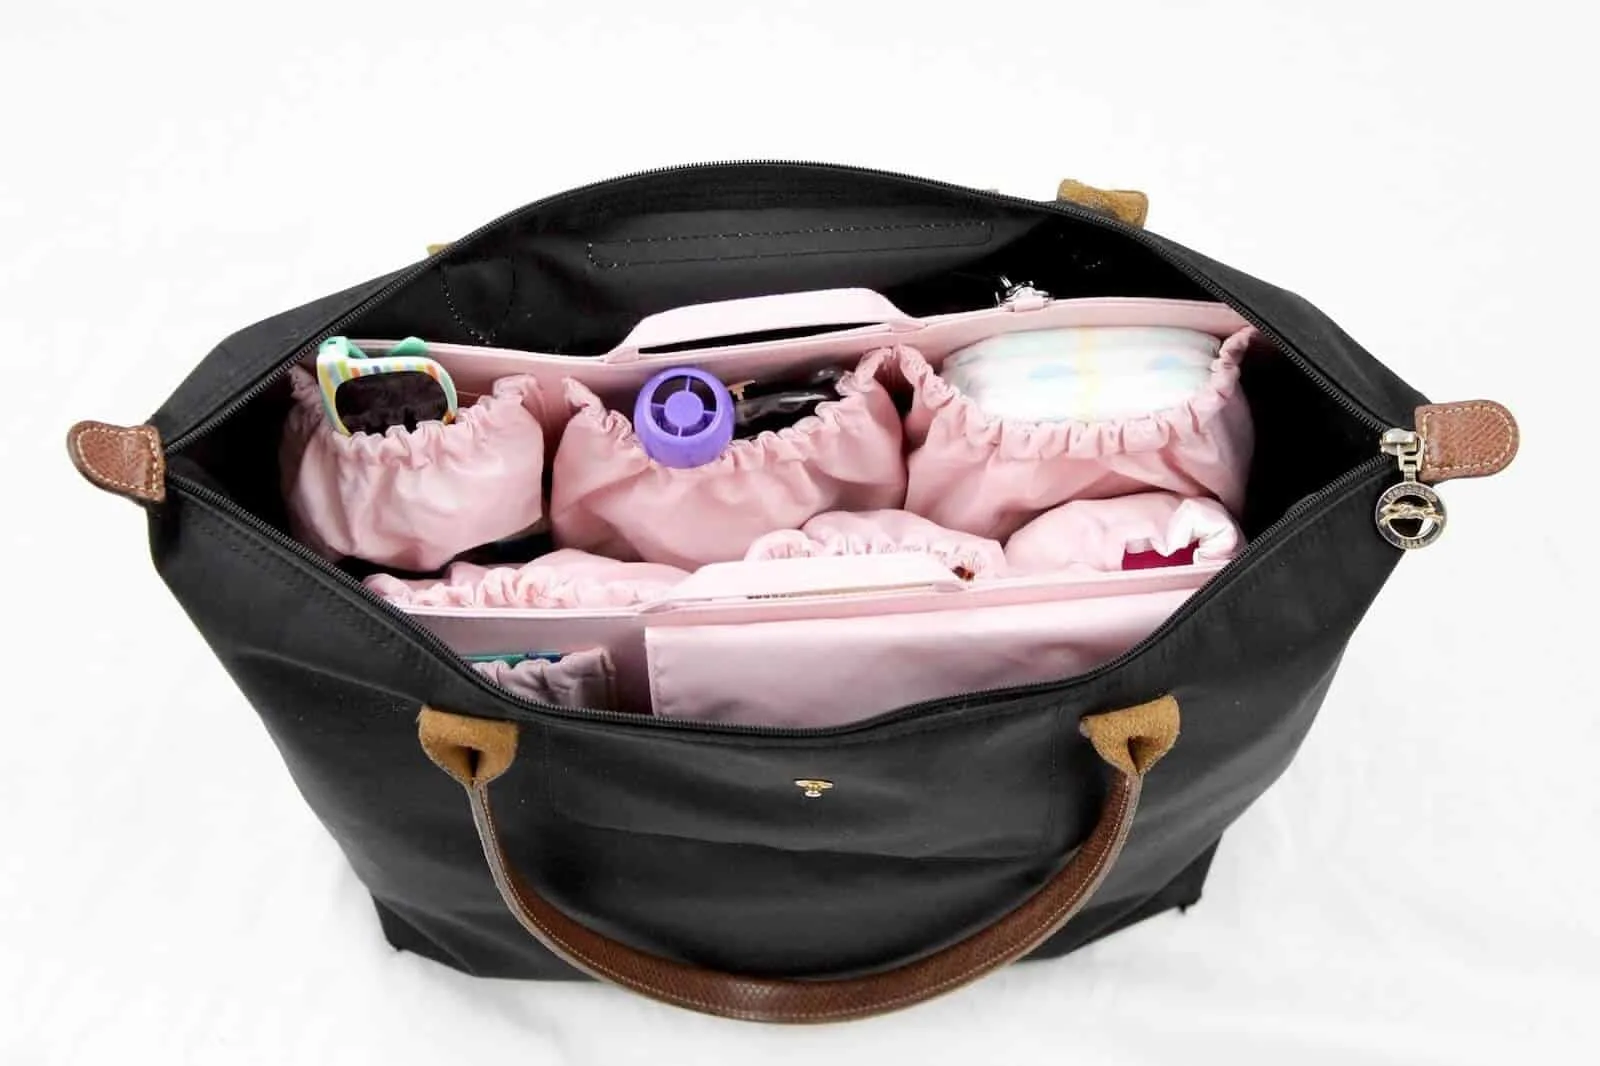 Diaper bag organization for toddler items.